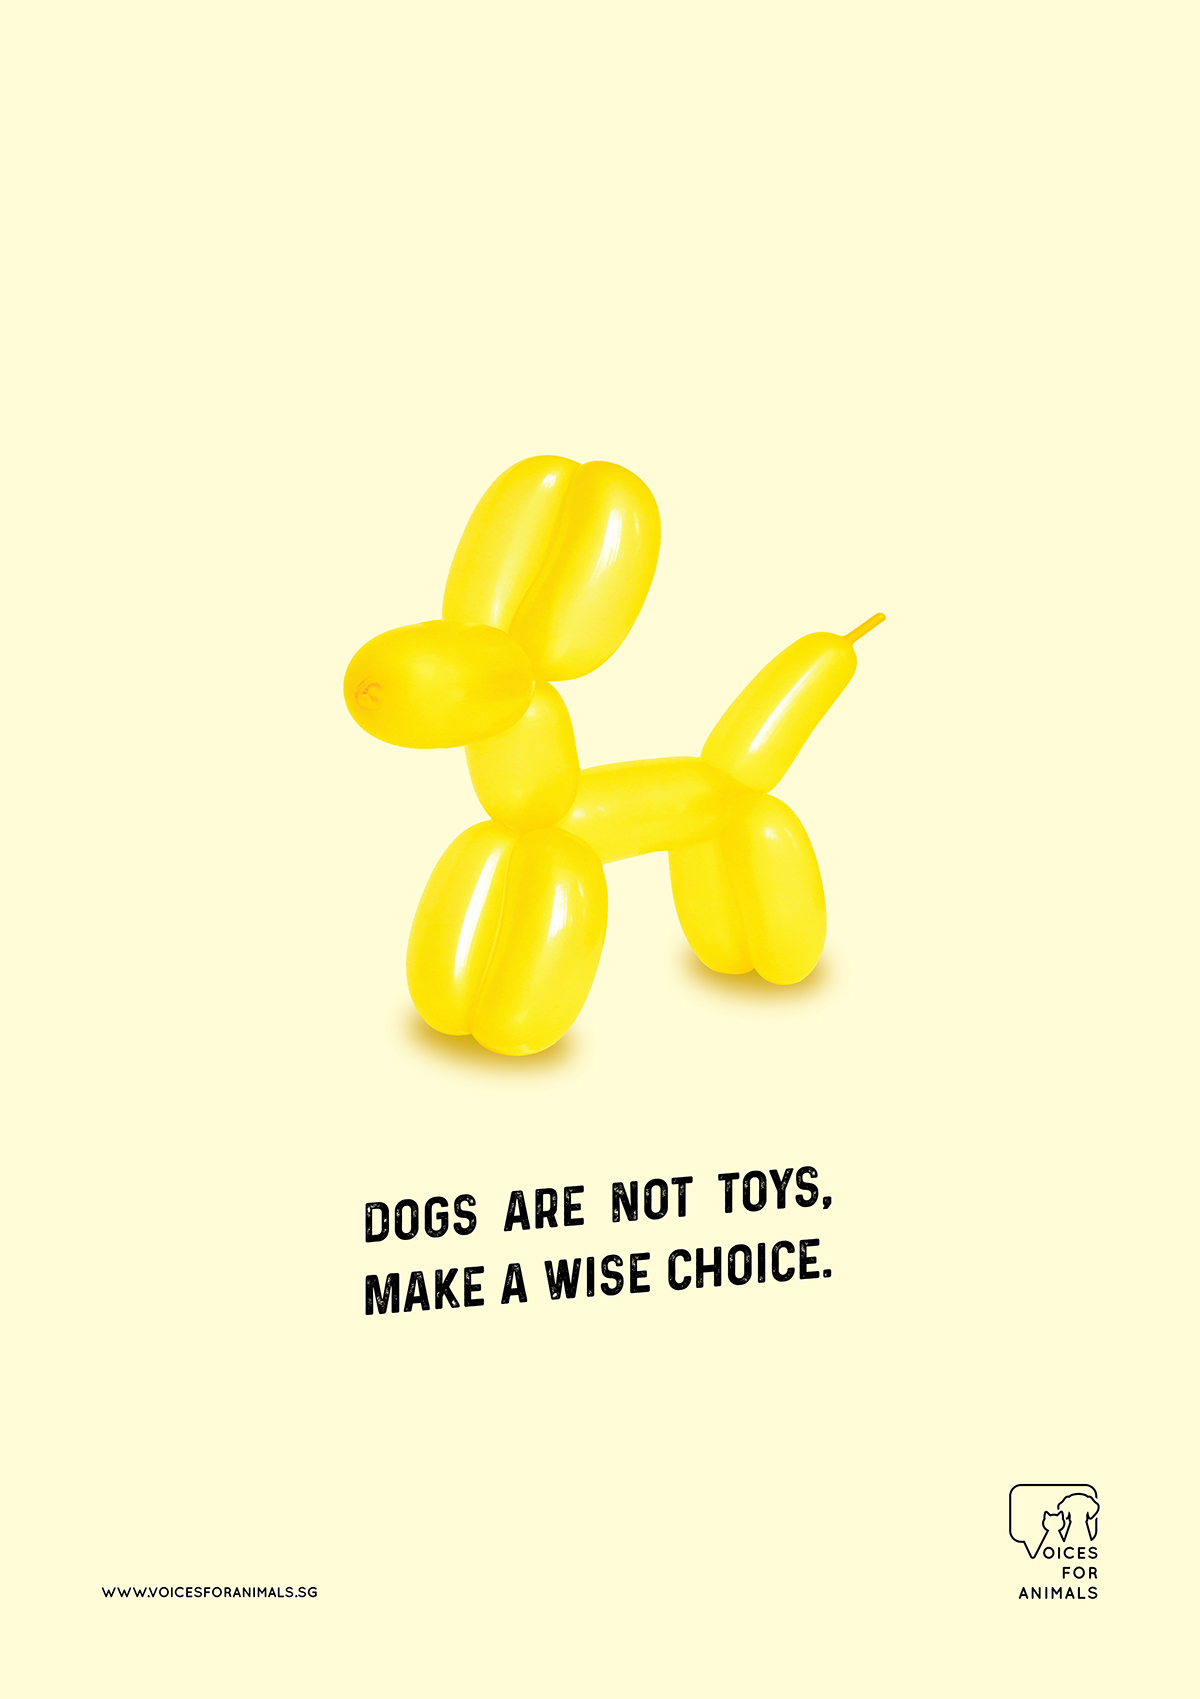 Dog Adoption Awareness Campaign Poster on Behance